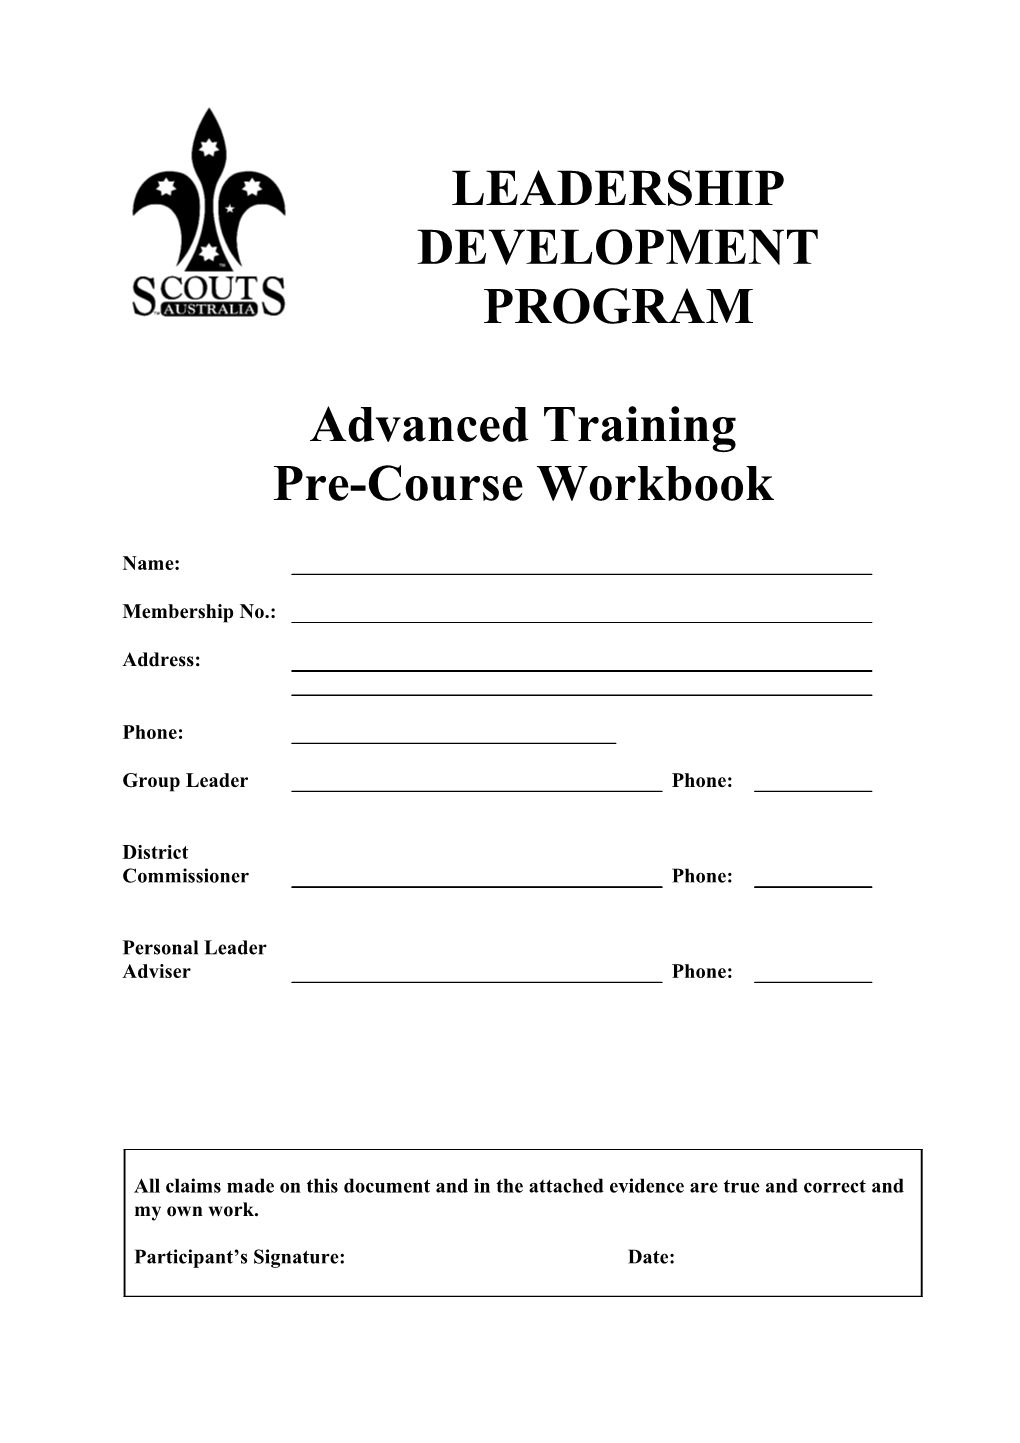 Advanced Training Pre-Course Workbook